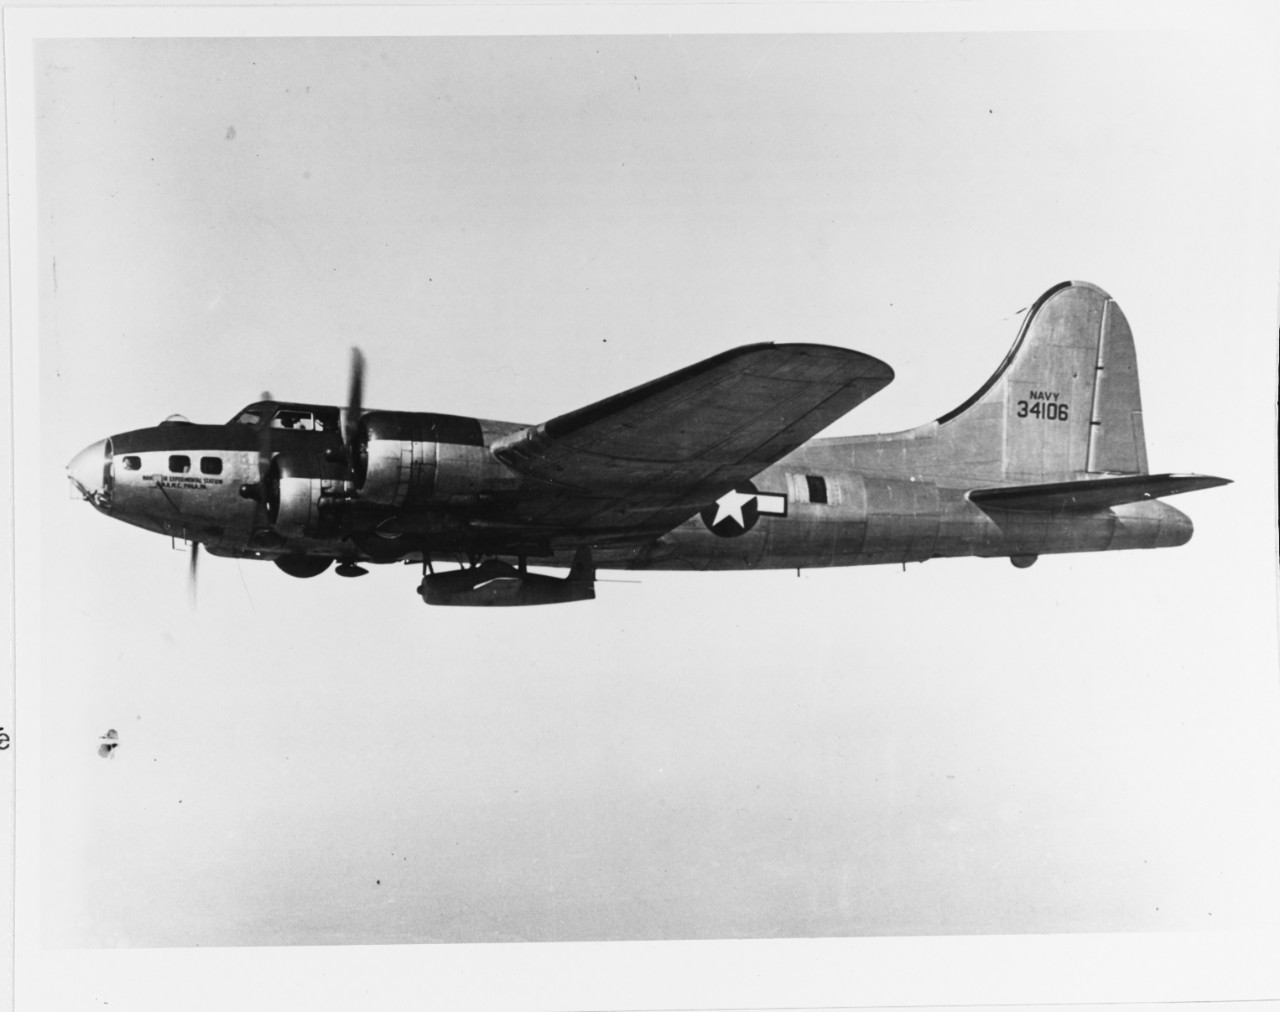 PB-1W "Flying Fortress"